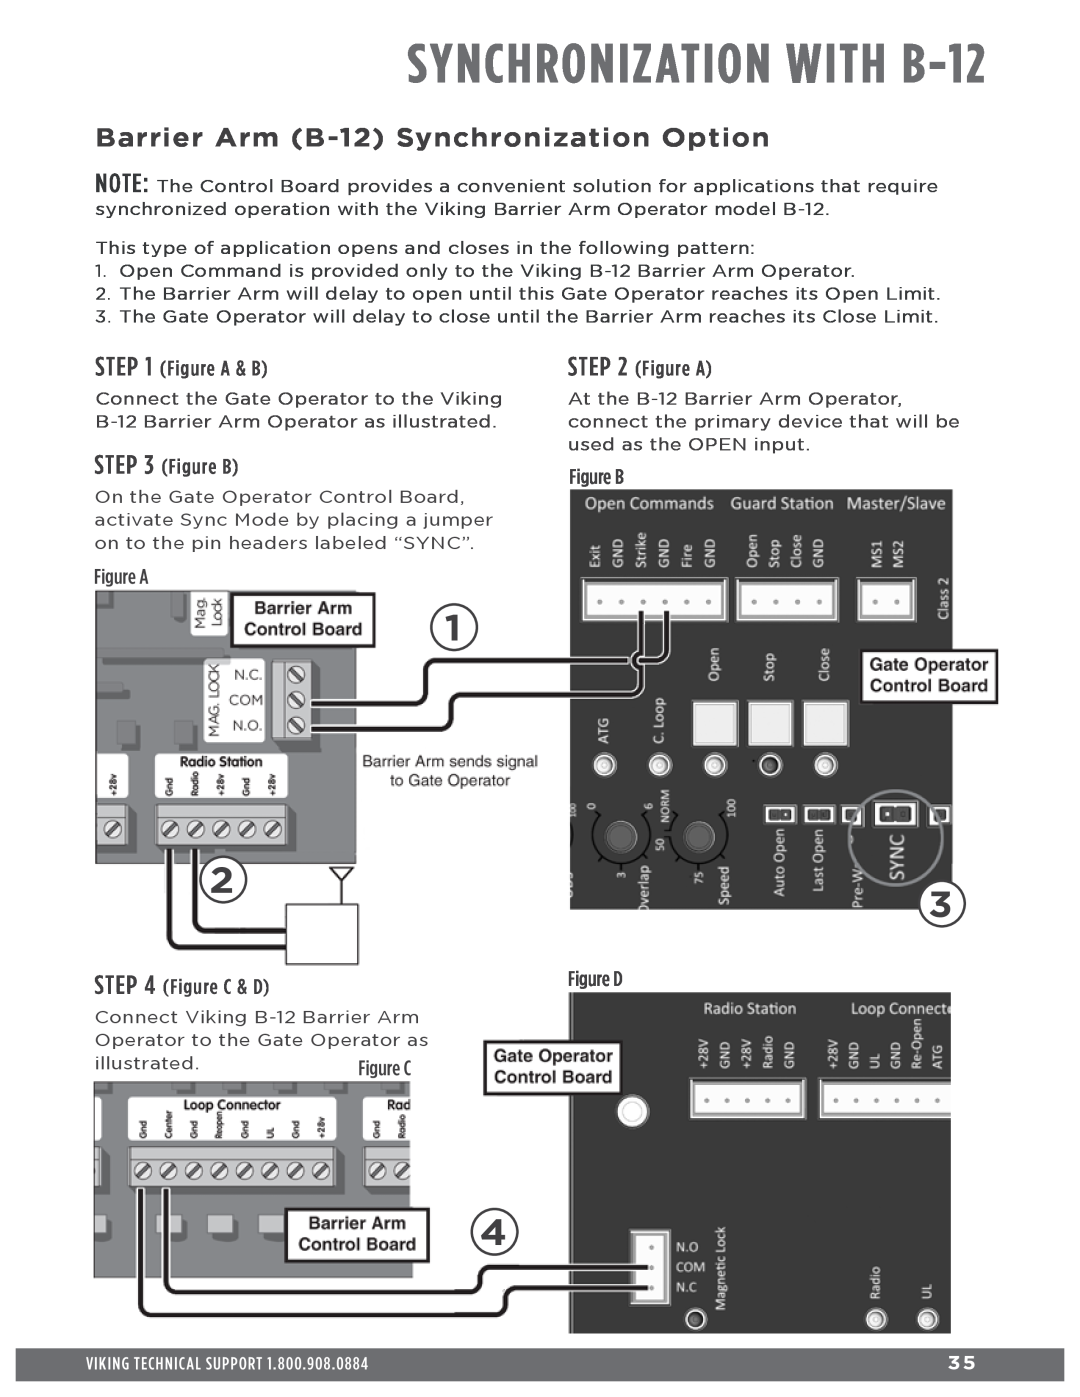 Viking Access Systems Q7 manual SYNCHRONIZATION WITH B-12, Barrier Arm B-12Synchronization Option, Figure A & B, Figure B 